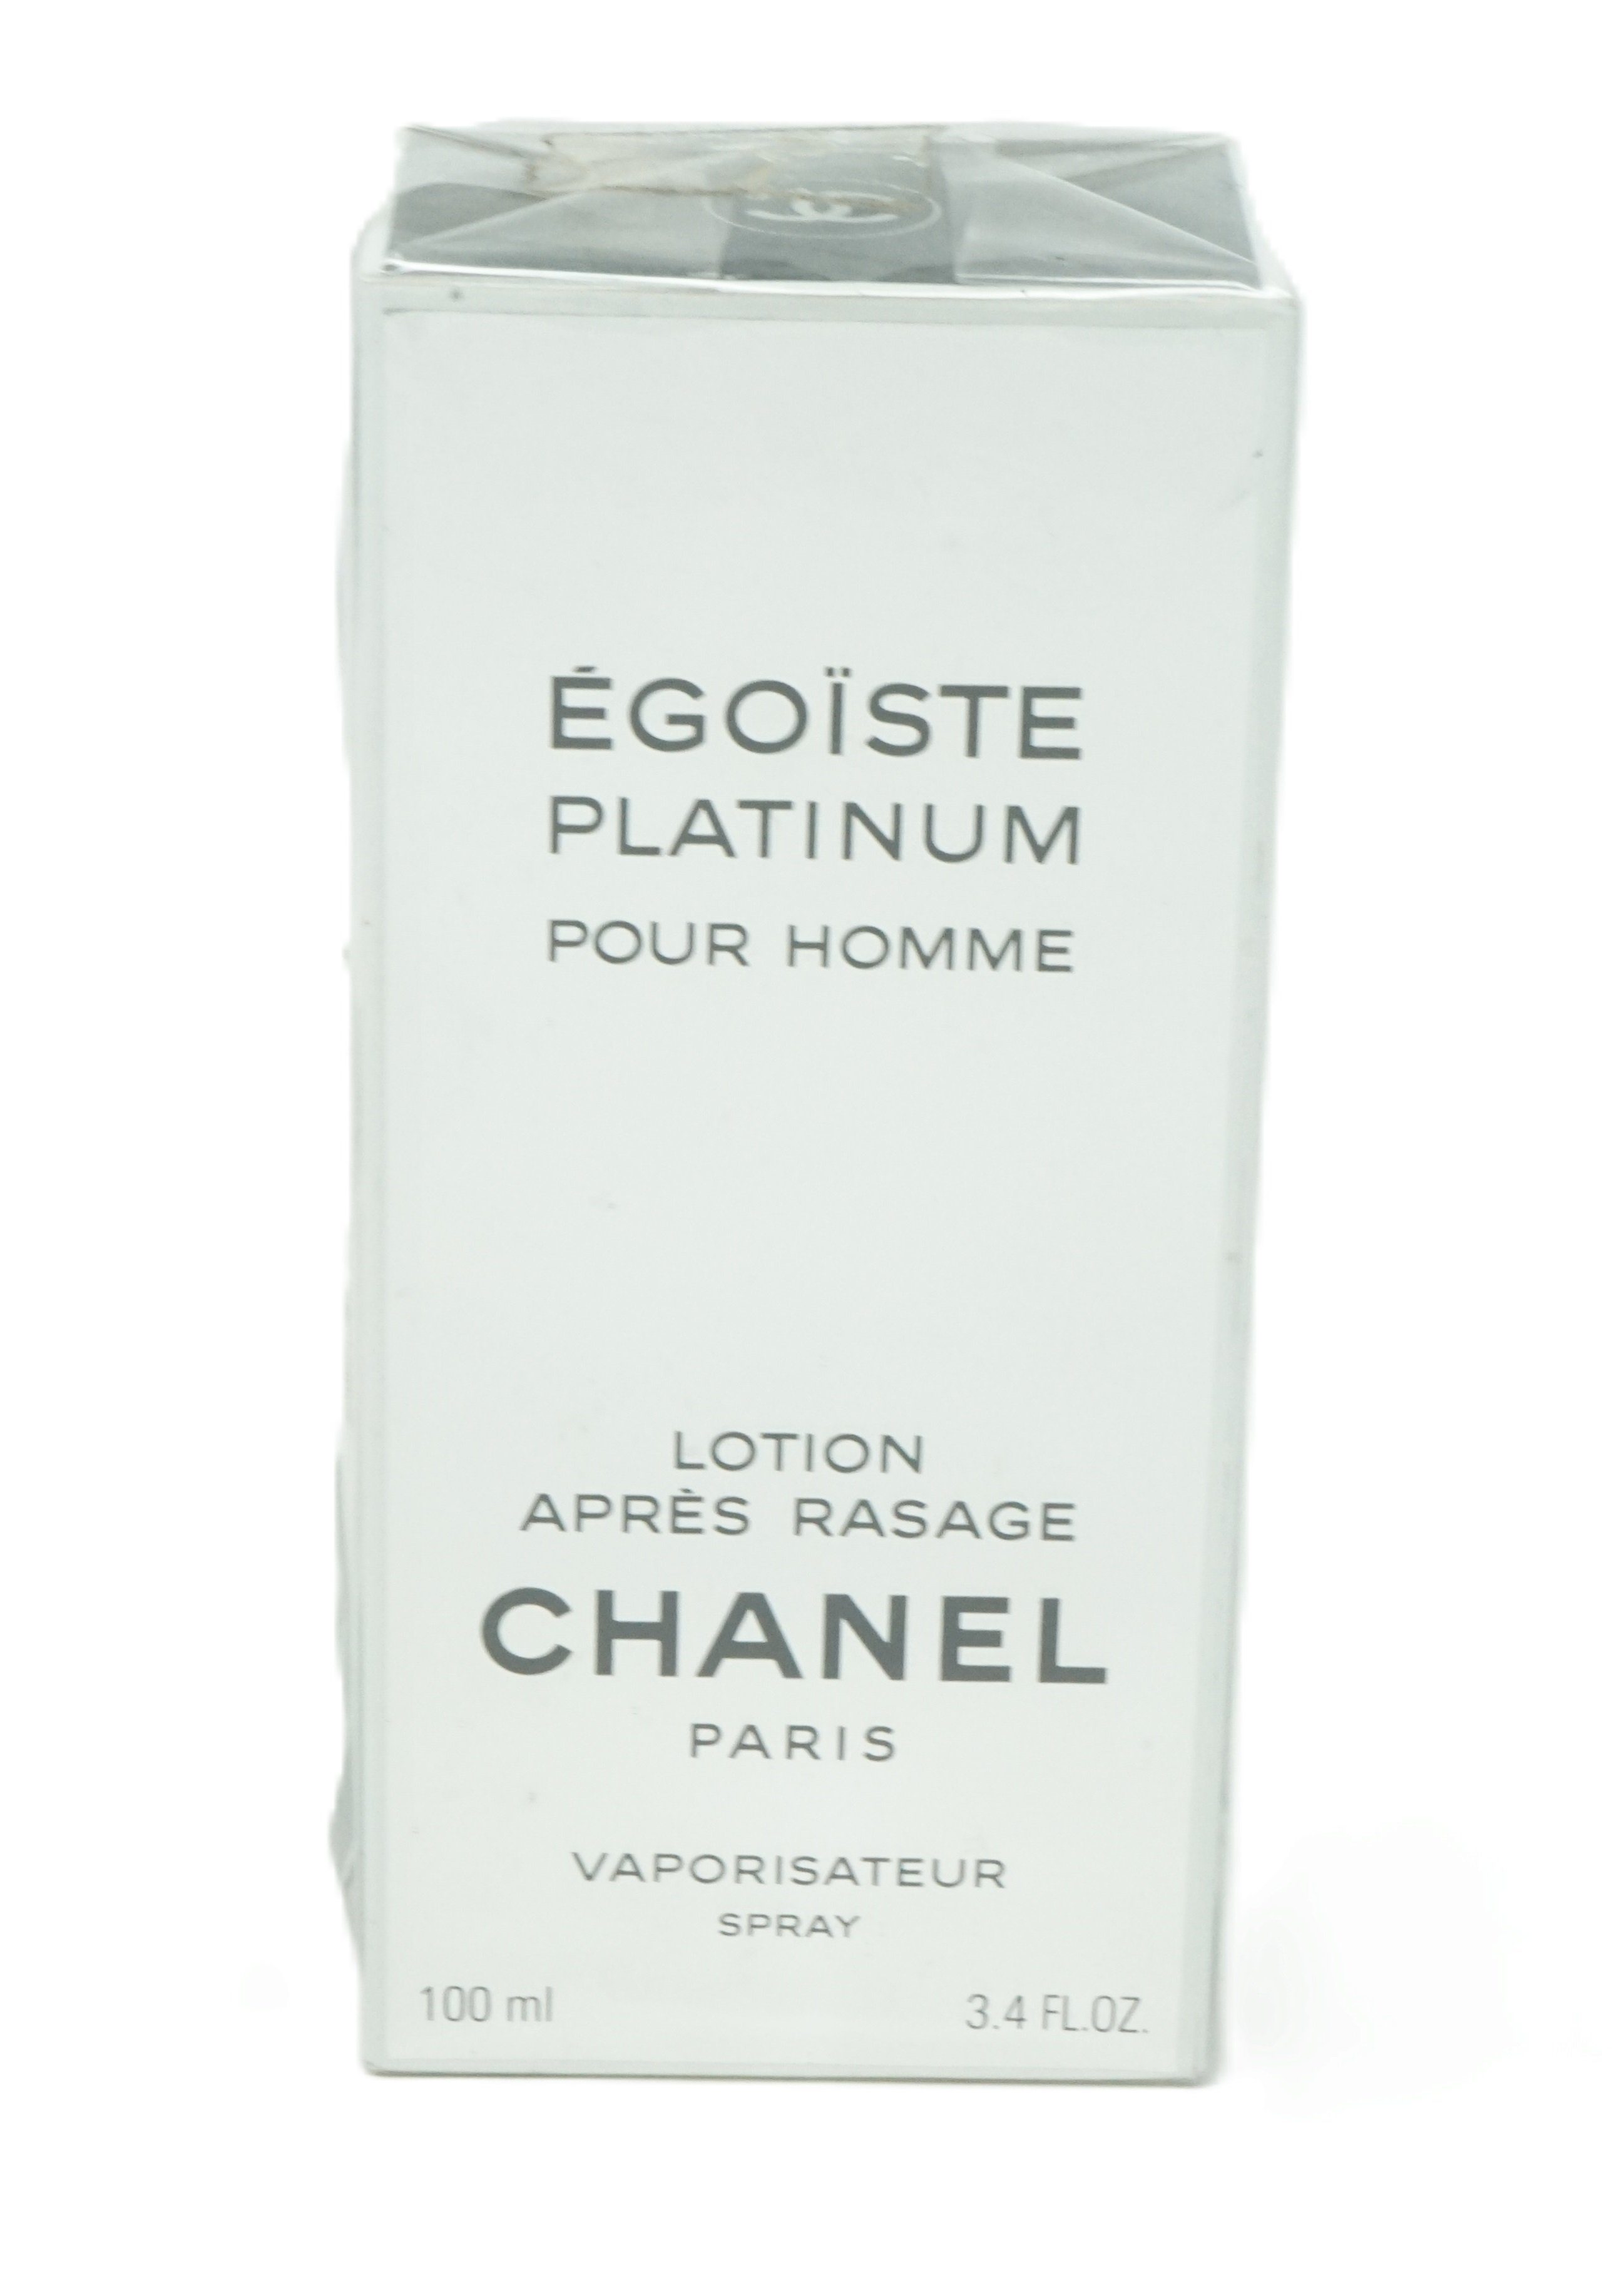 CHANEL After Shave Lotion Chanel Lotion After 100ml Égoiste Platinum Shave